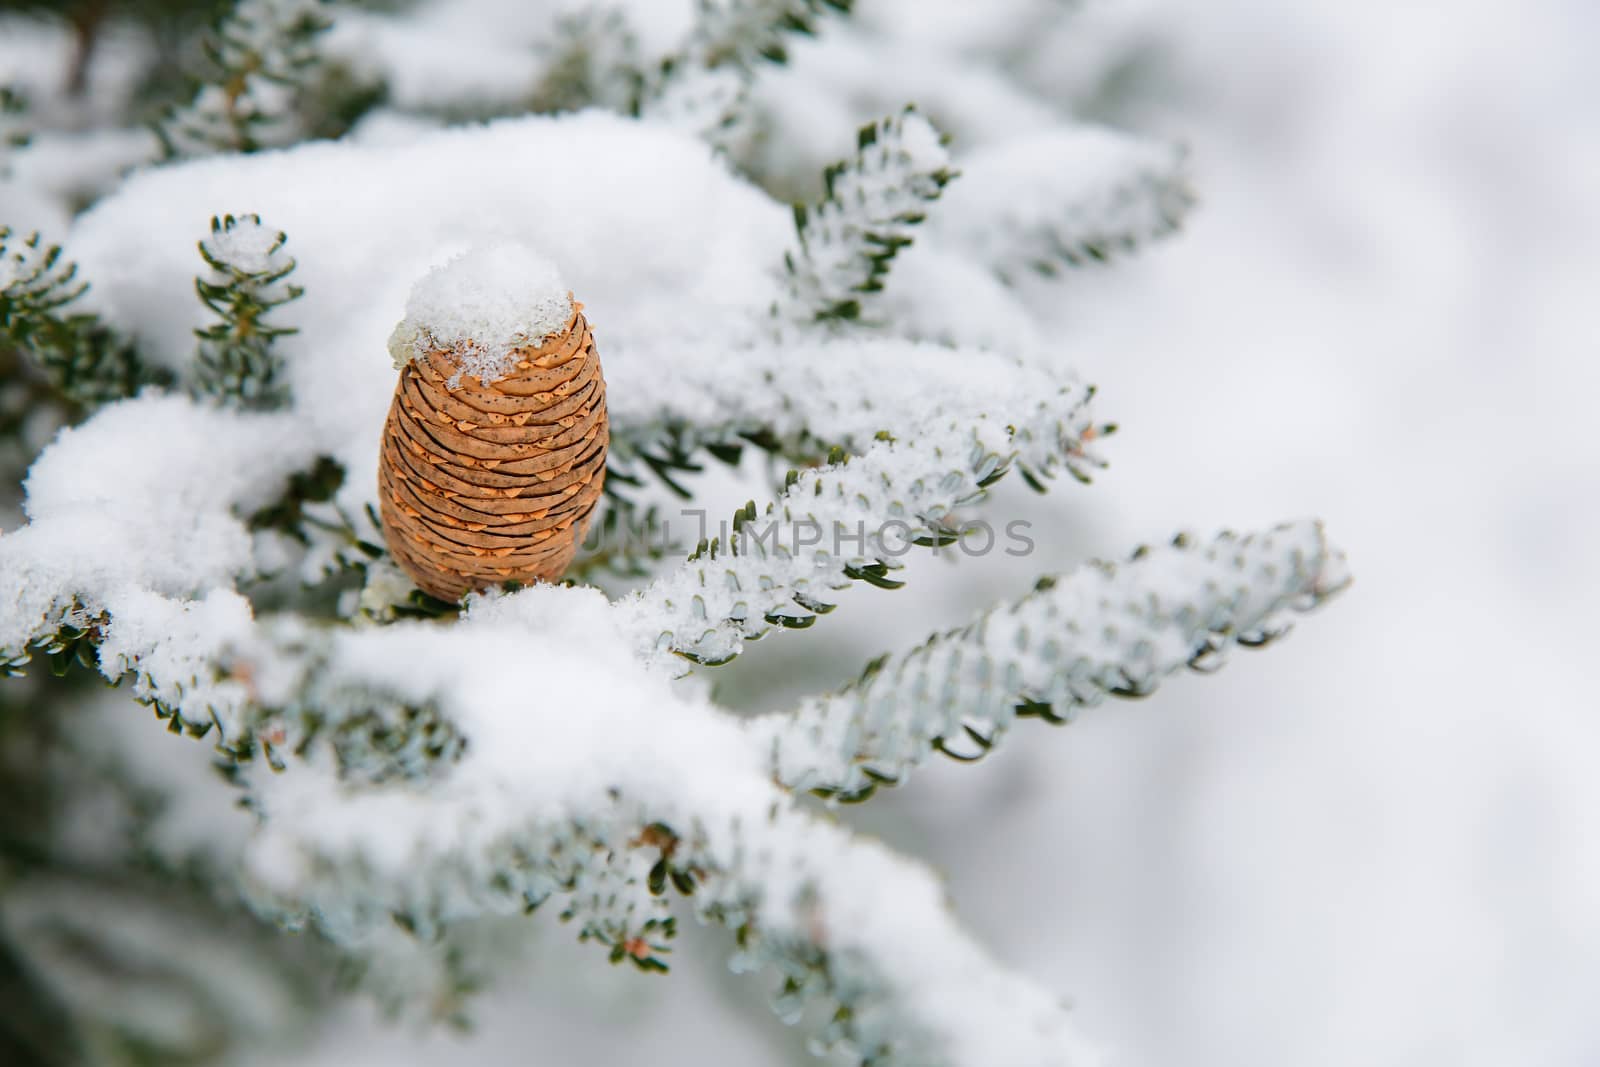 Siberian fir in winter with a beautiful cone